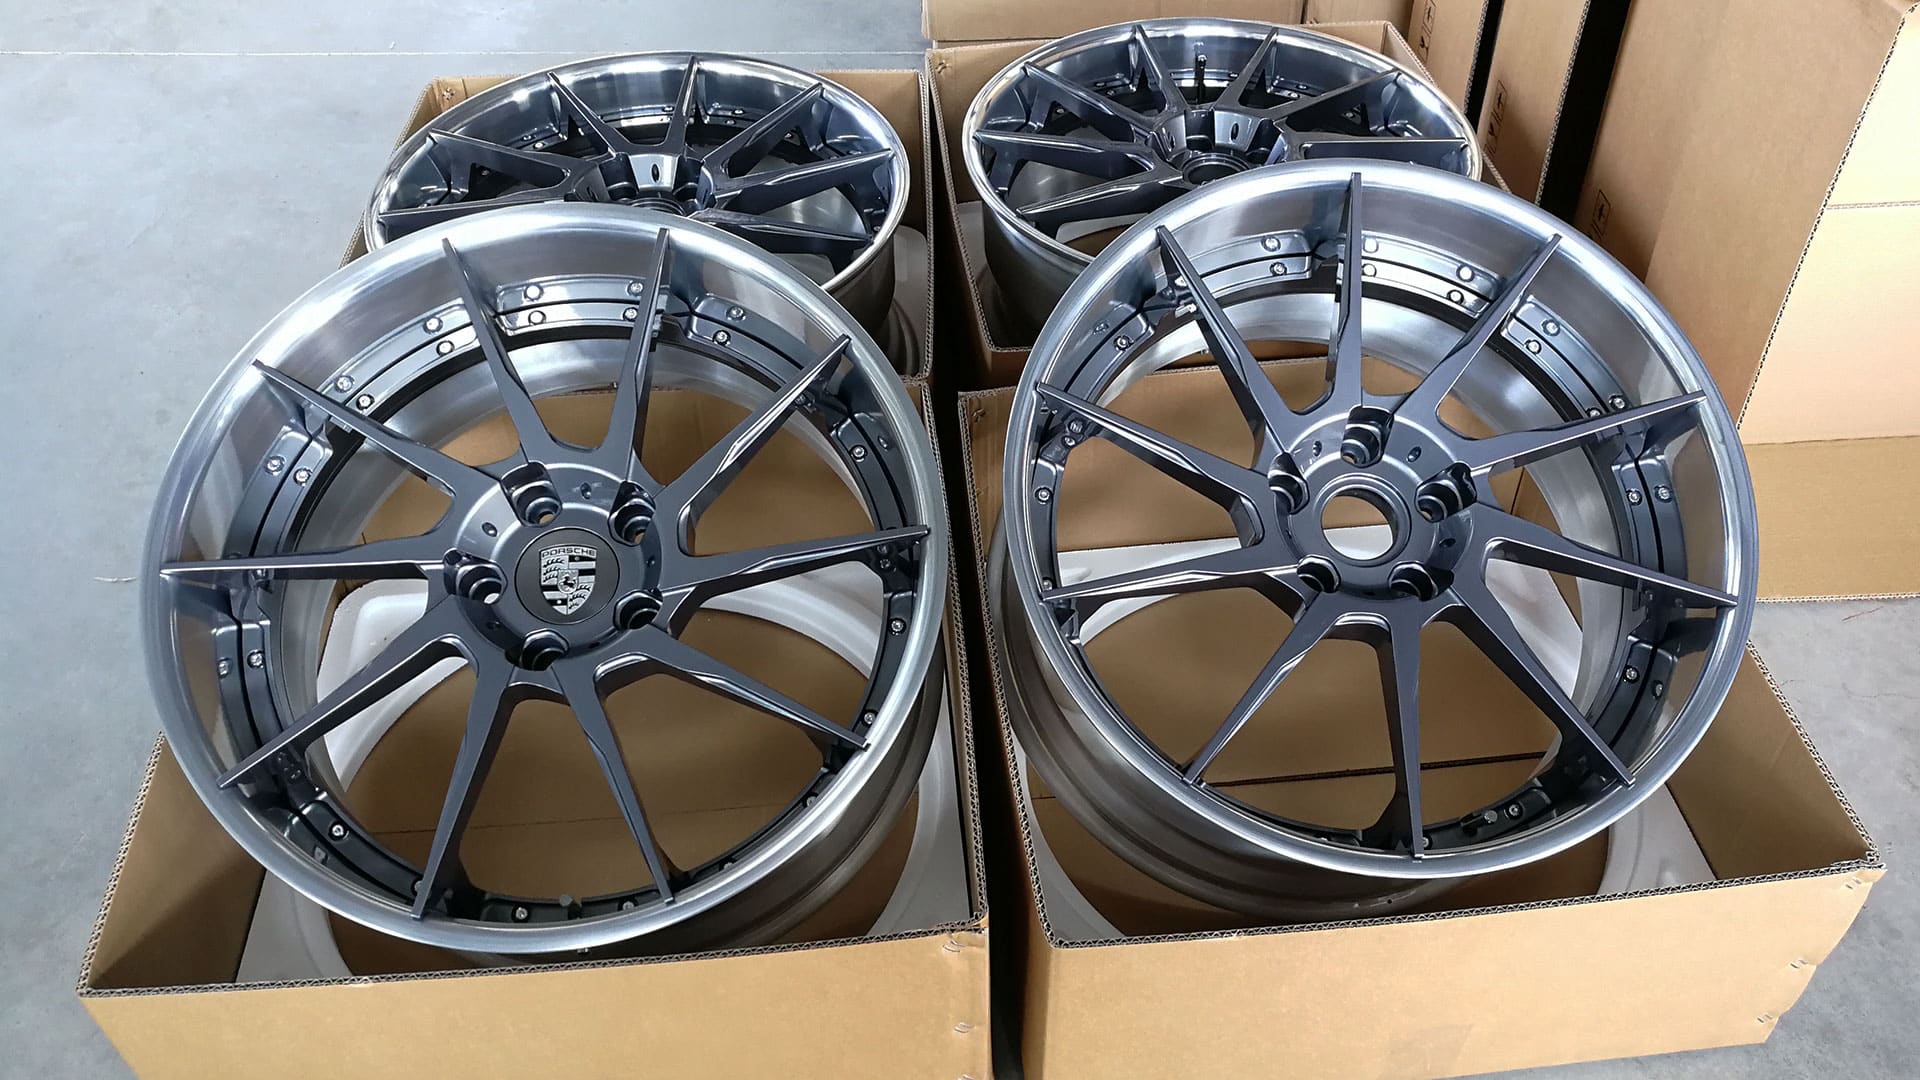 21 inch Custom Forged Wheels for Porsche sitting on warehouse floor